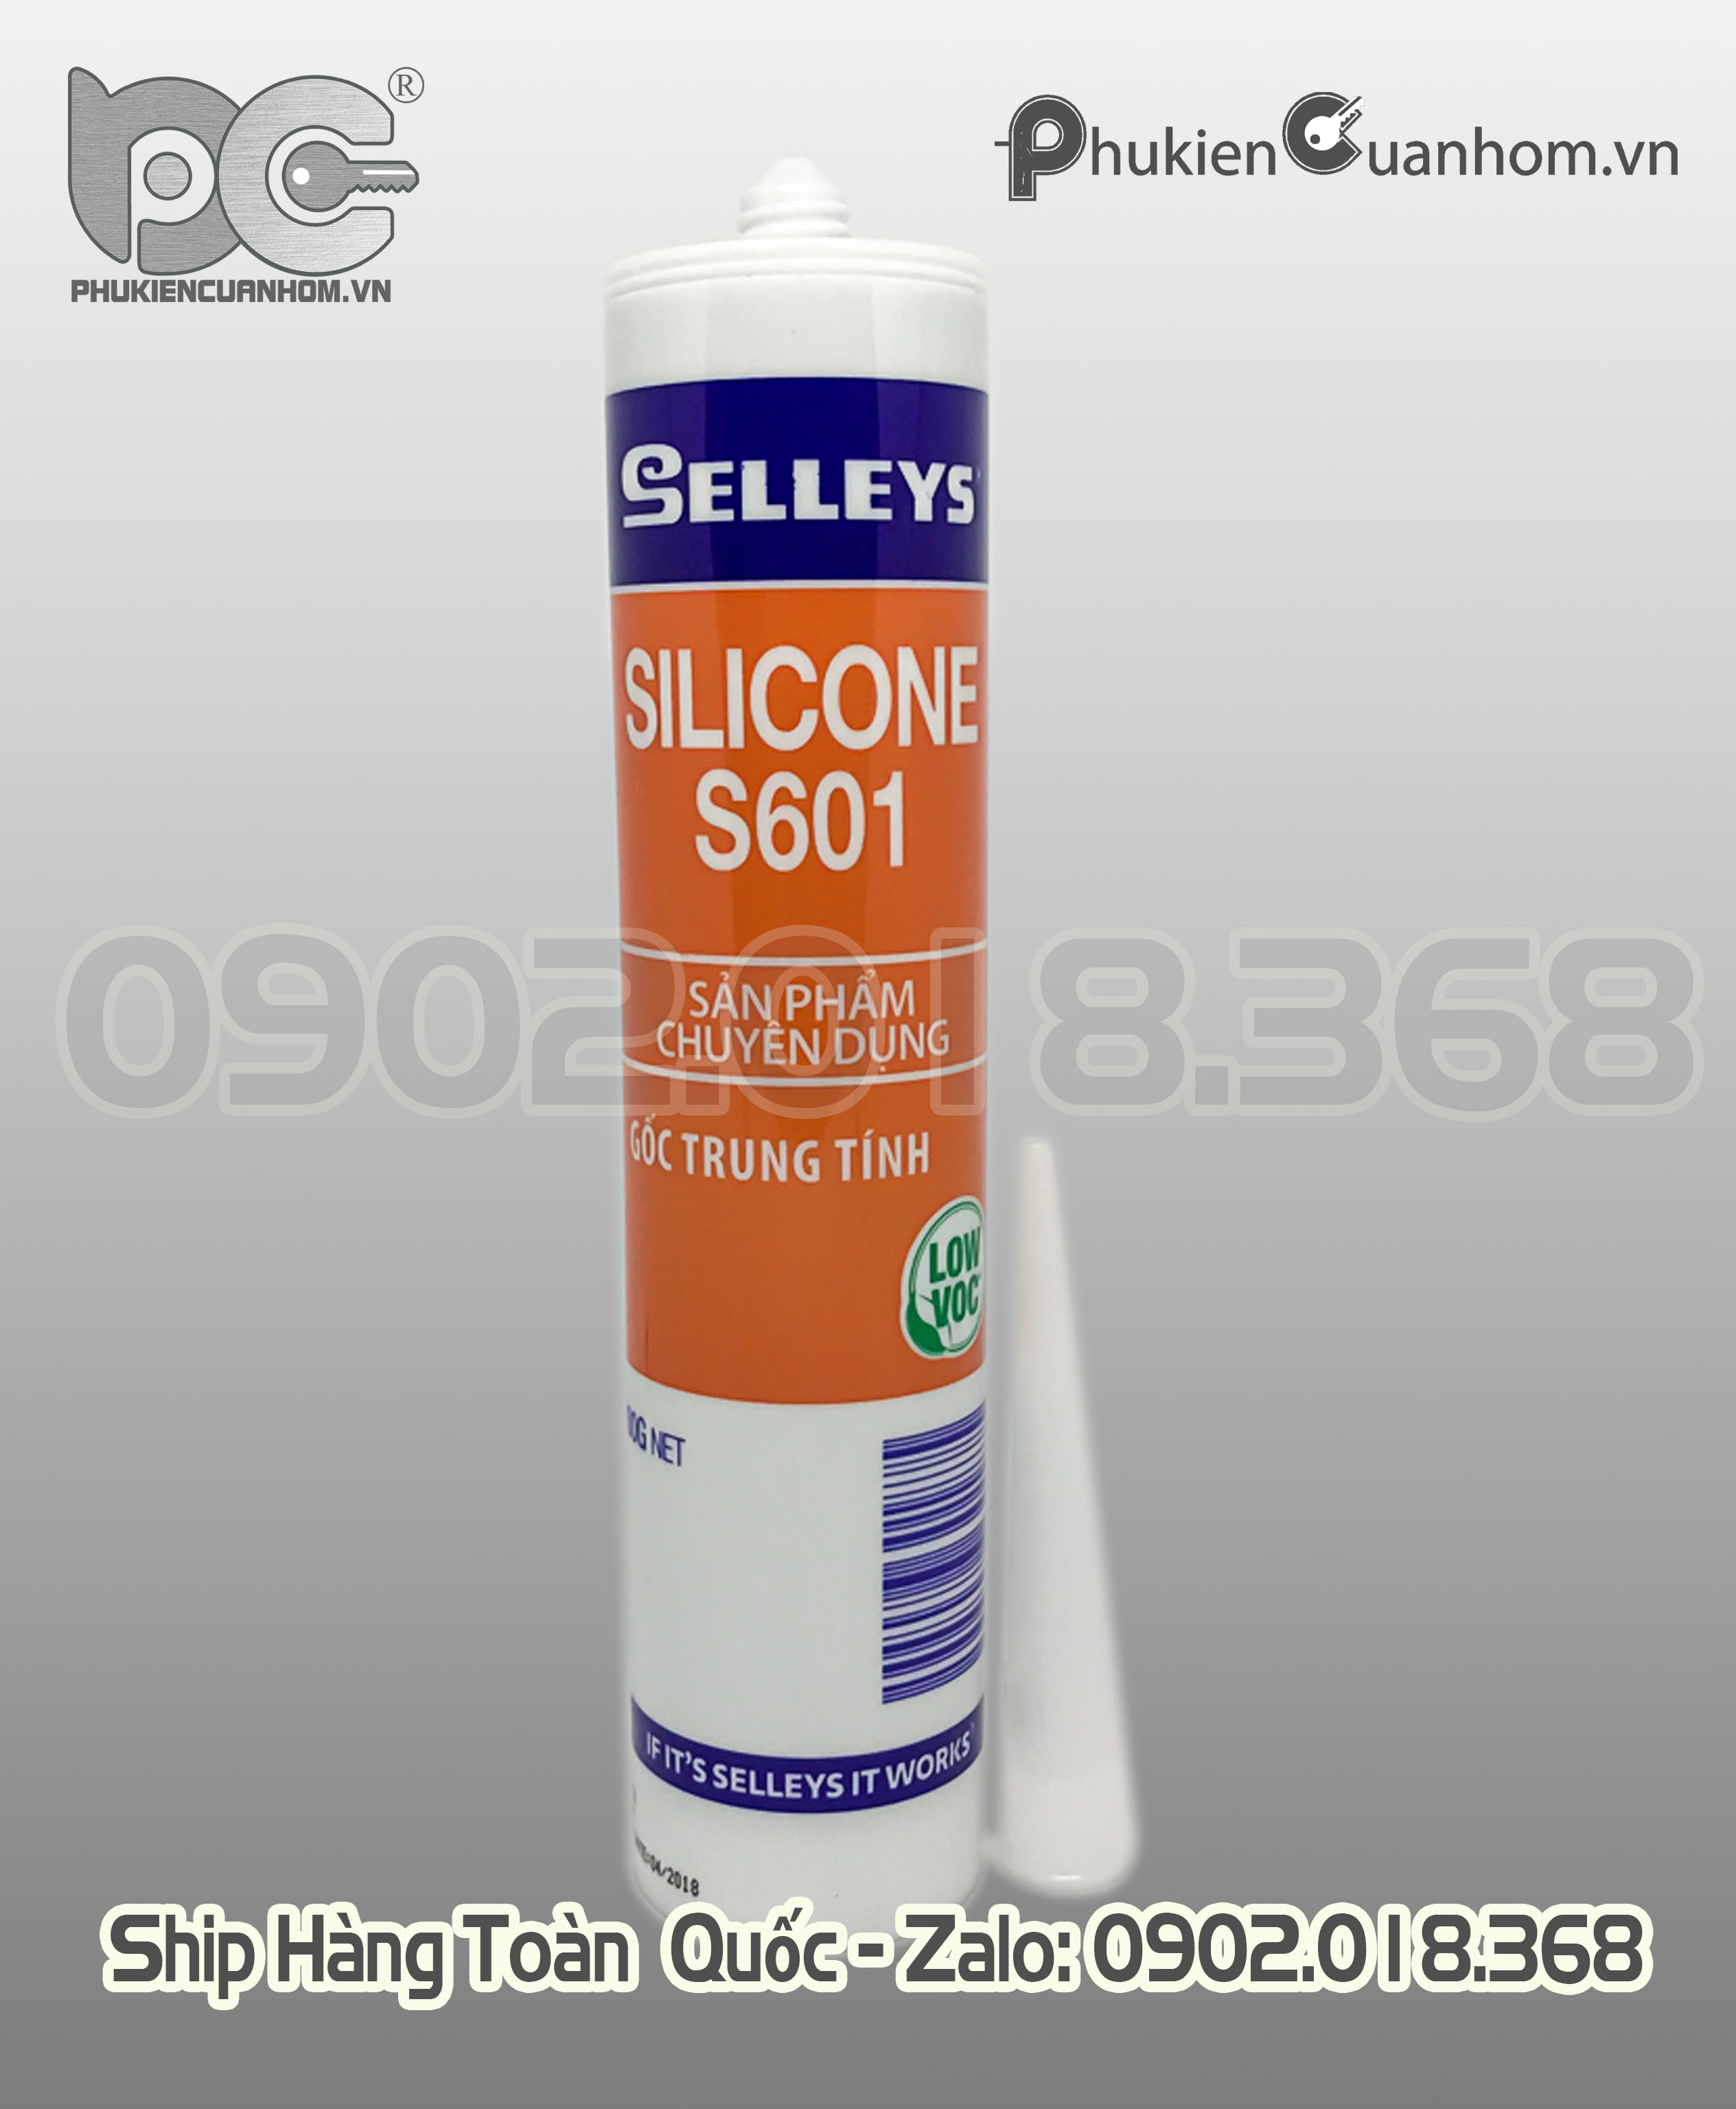 Keo silicone trung tính chuyên dụng - Selleys silicone S601